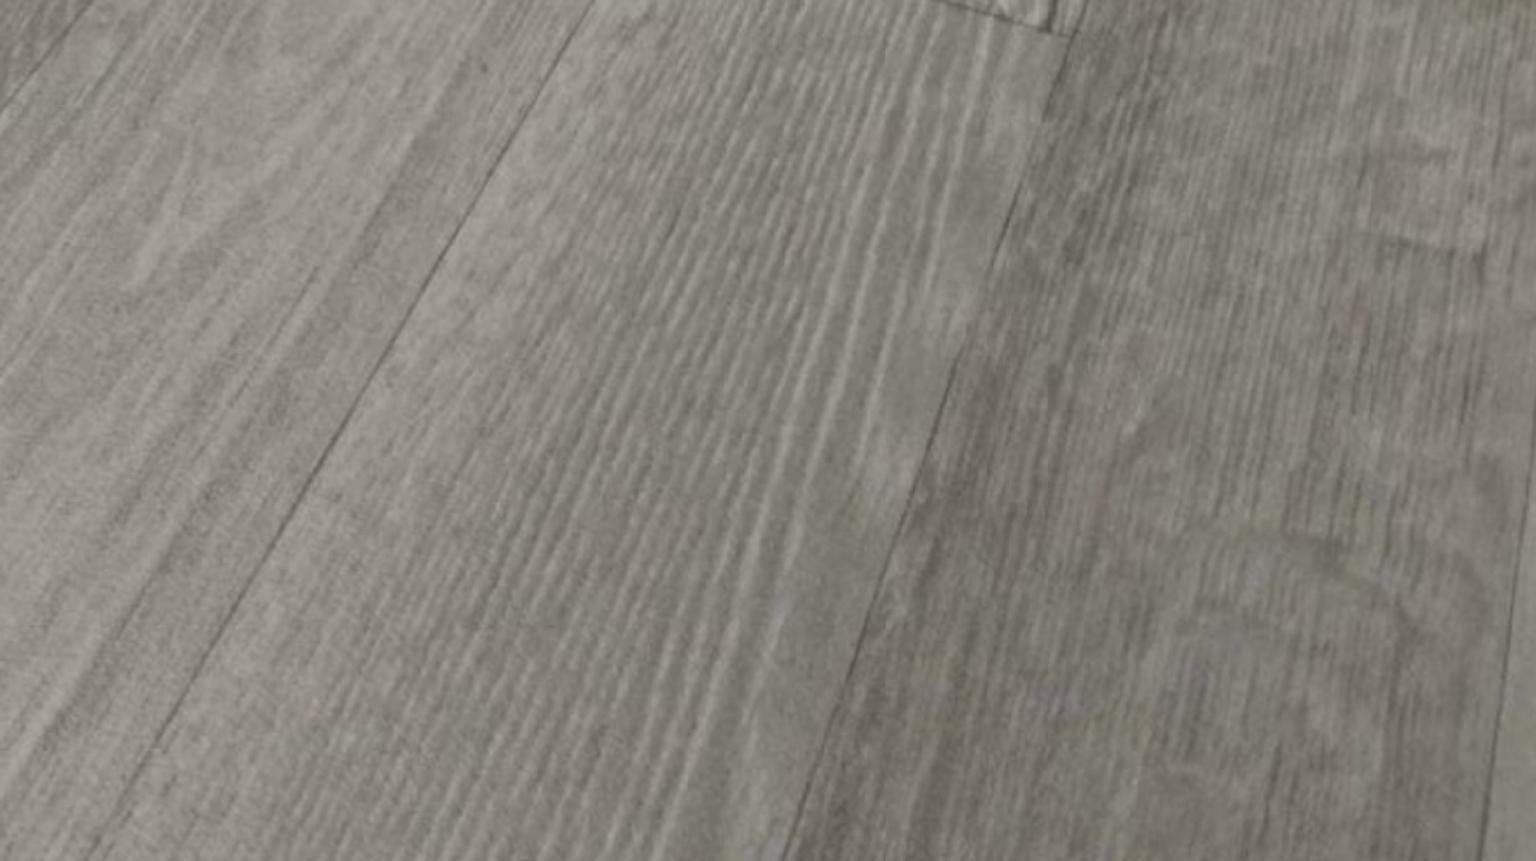 New Wood Effect Vinyl Flooring Roll 3x4 Mt In E1 Hamlets For